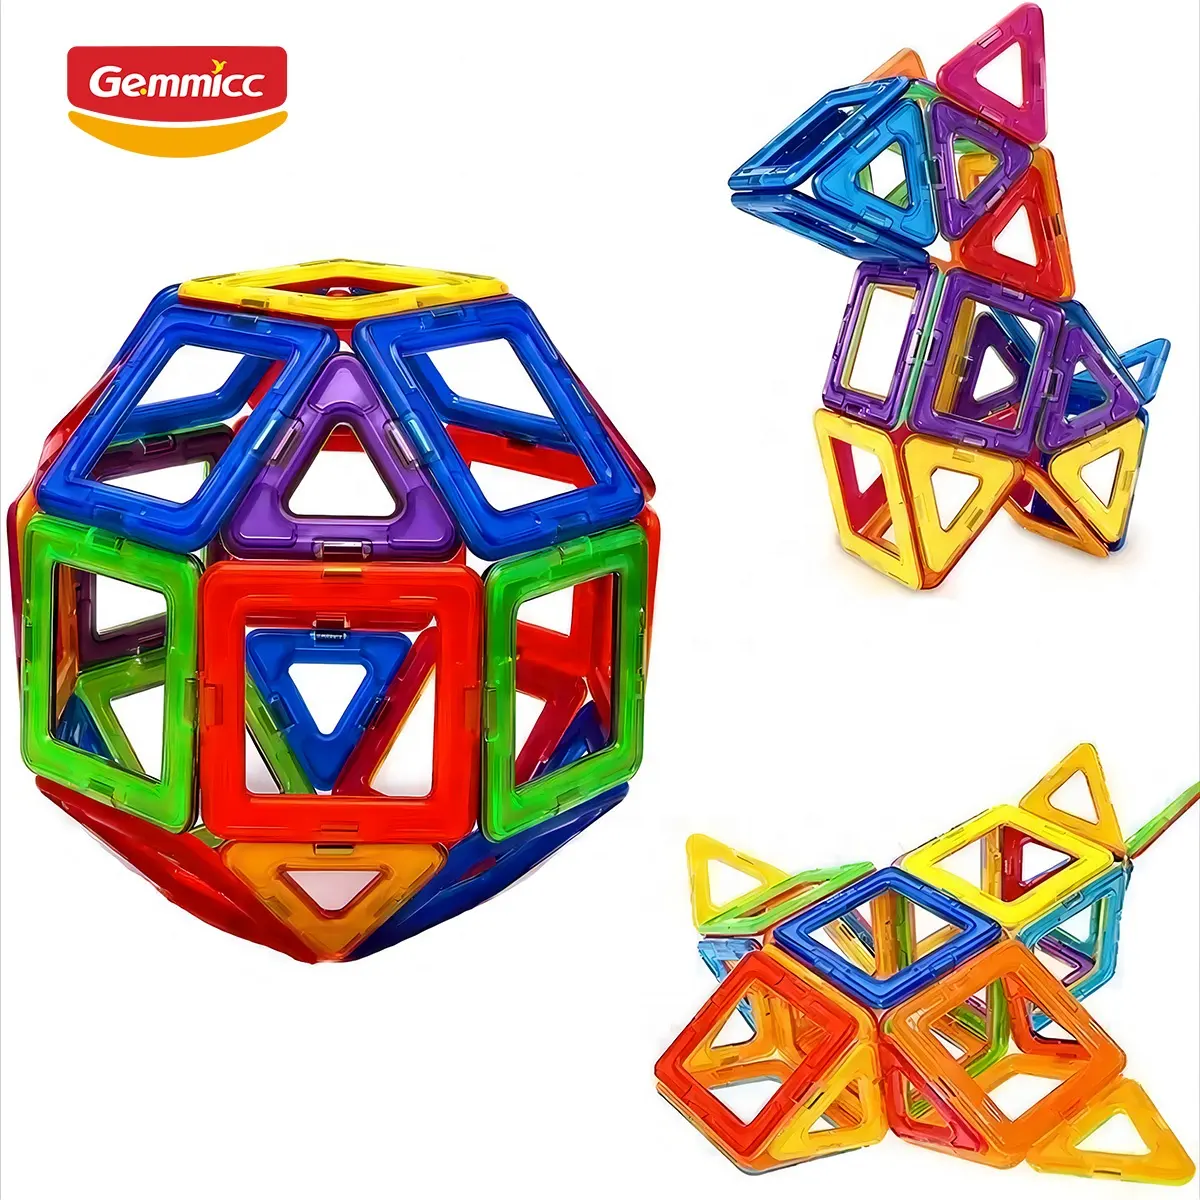 Gemmicc 어린이 교육 완구 증기 줄기 3D 마그네틱 블록 및 모델 조립 완구